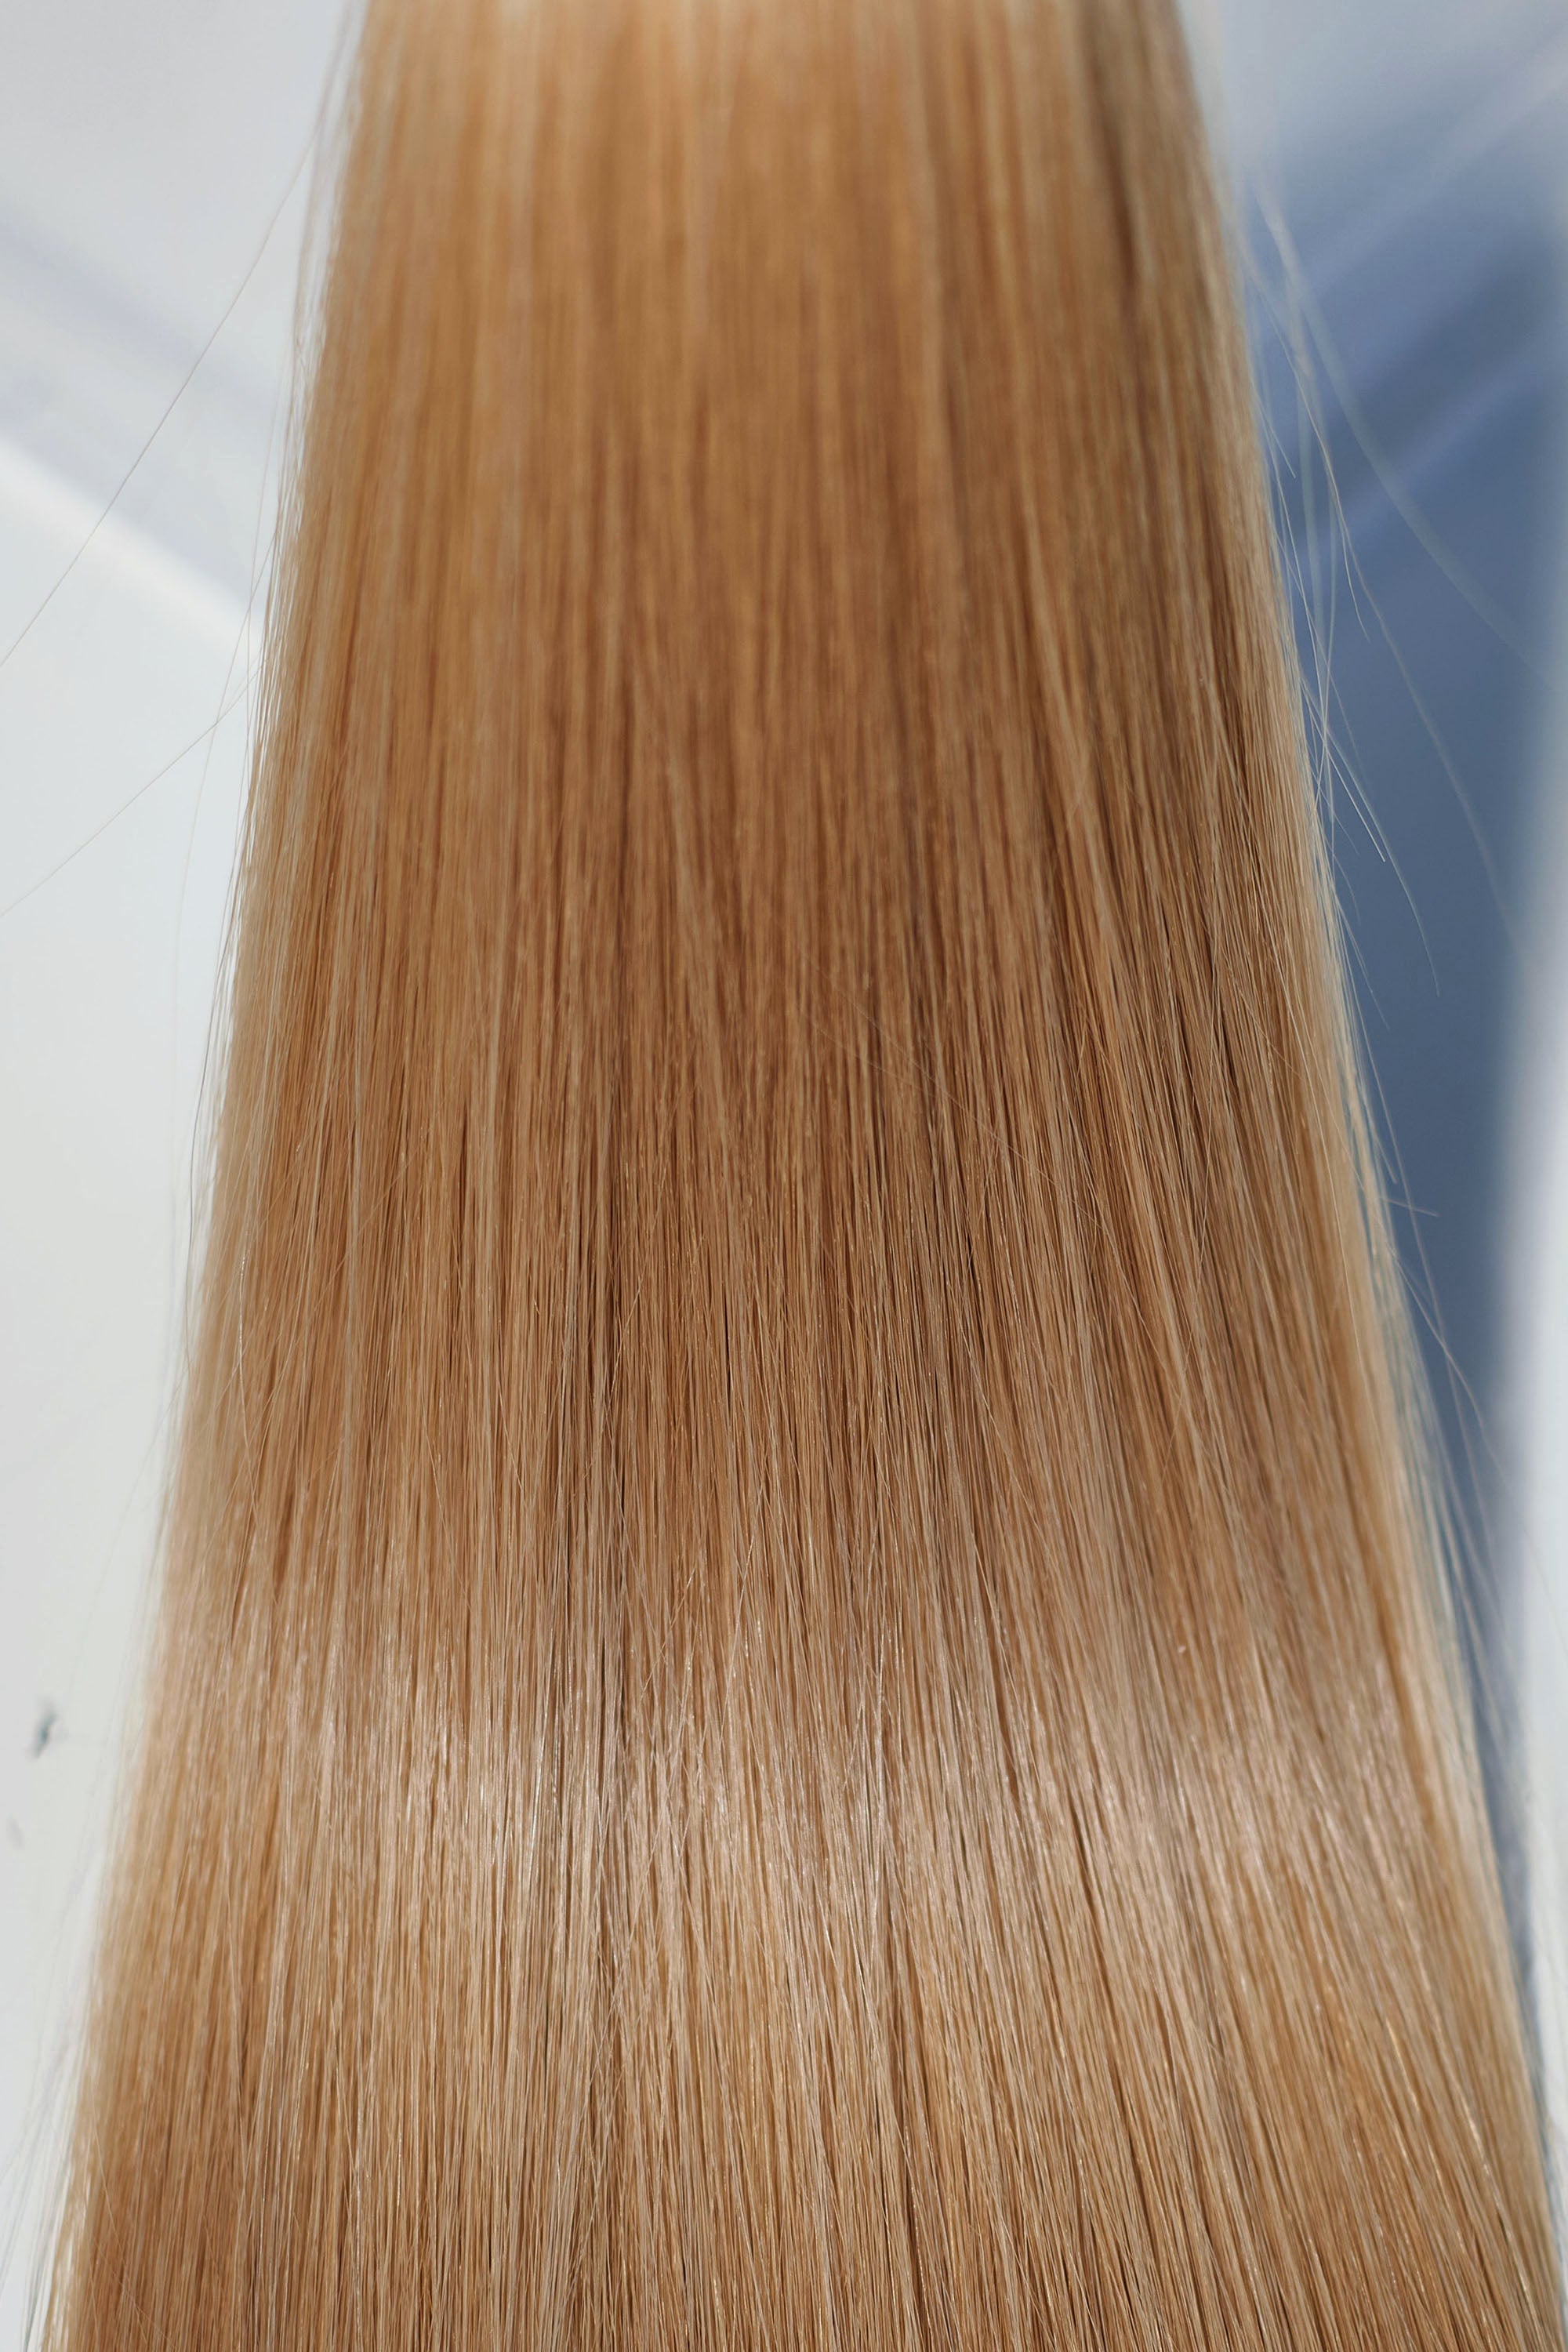 Behair professional Keratin Tip "Premium" 28" (70cm) Natural Straight Gold Sand #18 - 25g (Micro - 0.5g each pcs) hair extensions